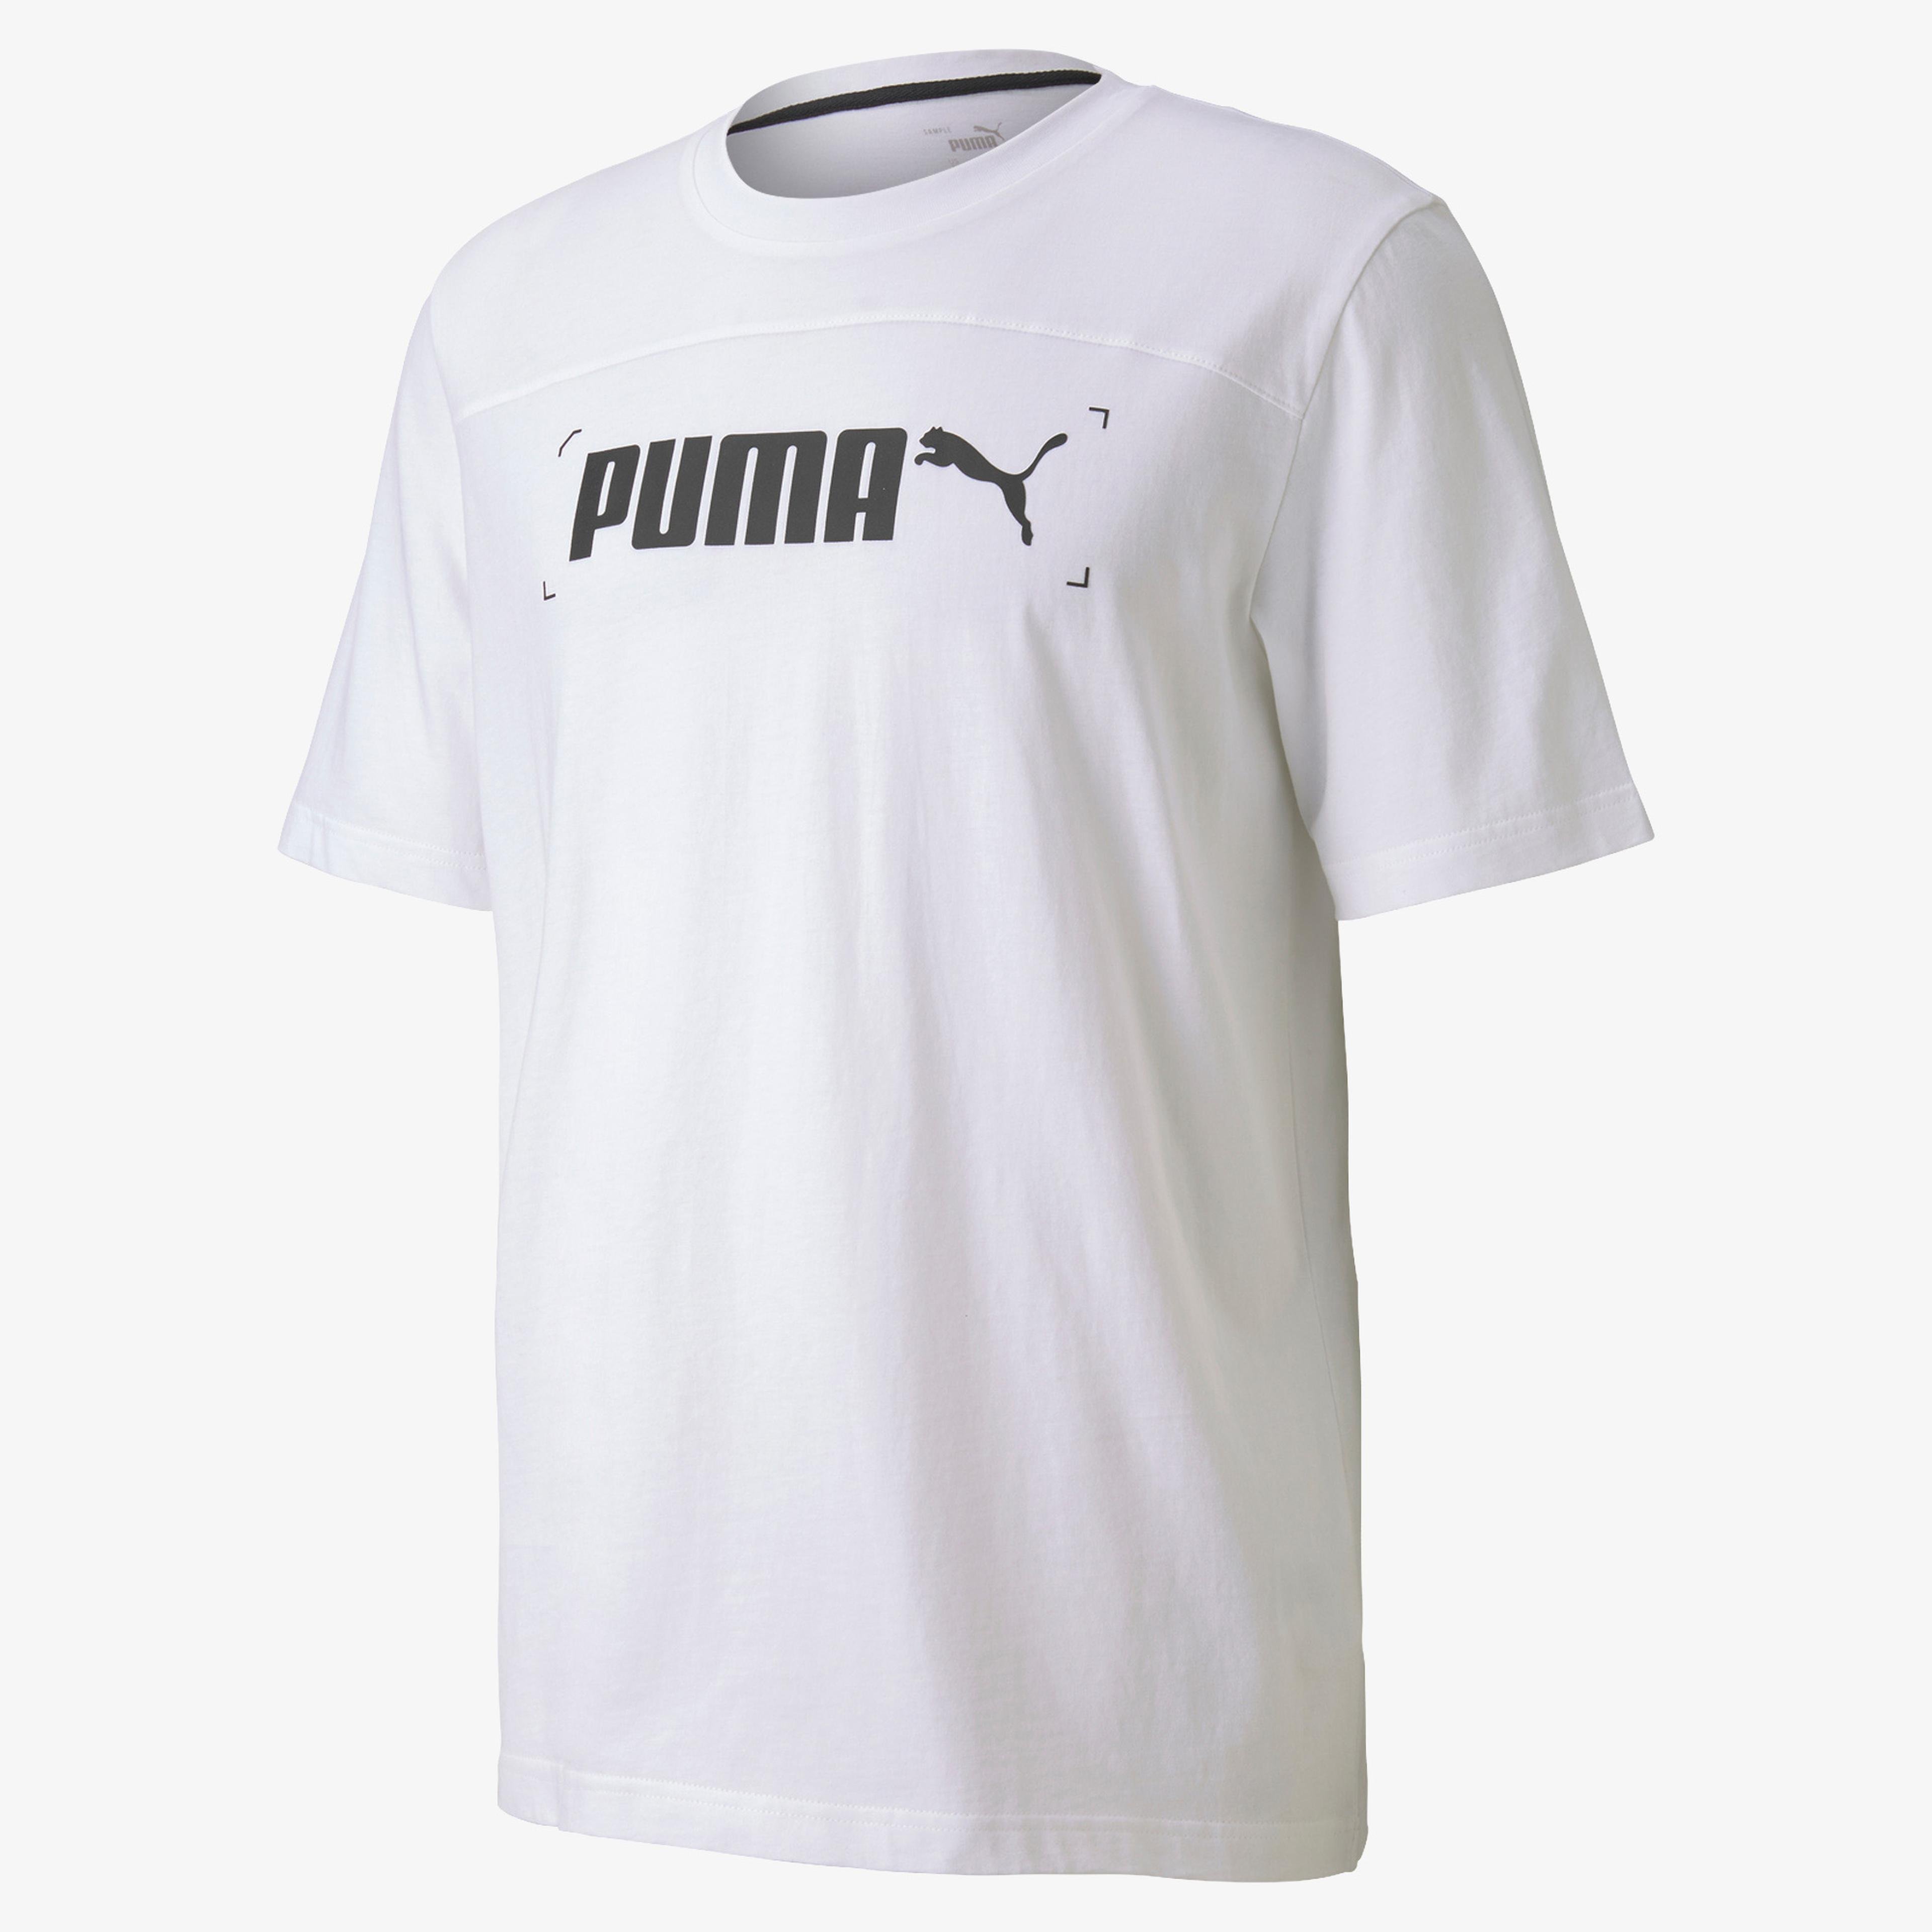 Puma Nu-Tility Erkek Beyaz T-Shirt